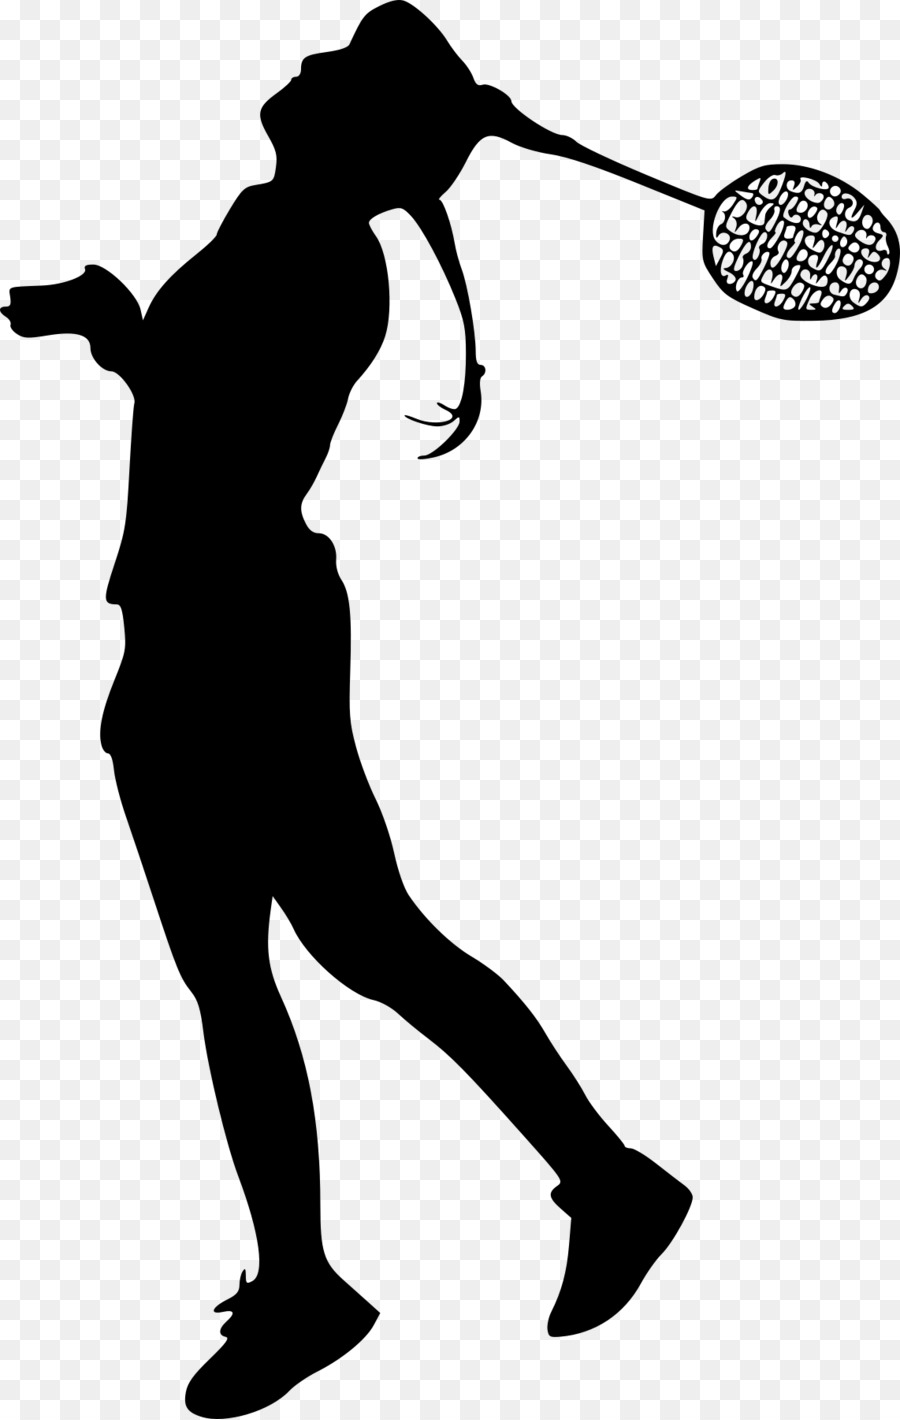 Badminton Background clipart